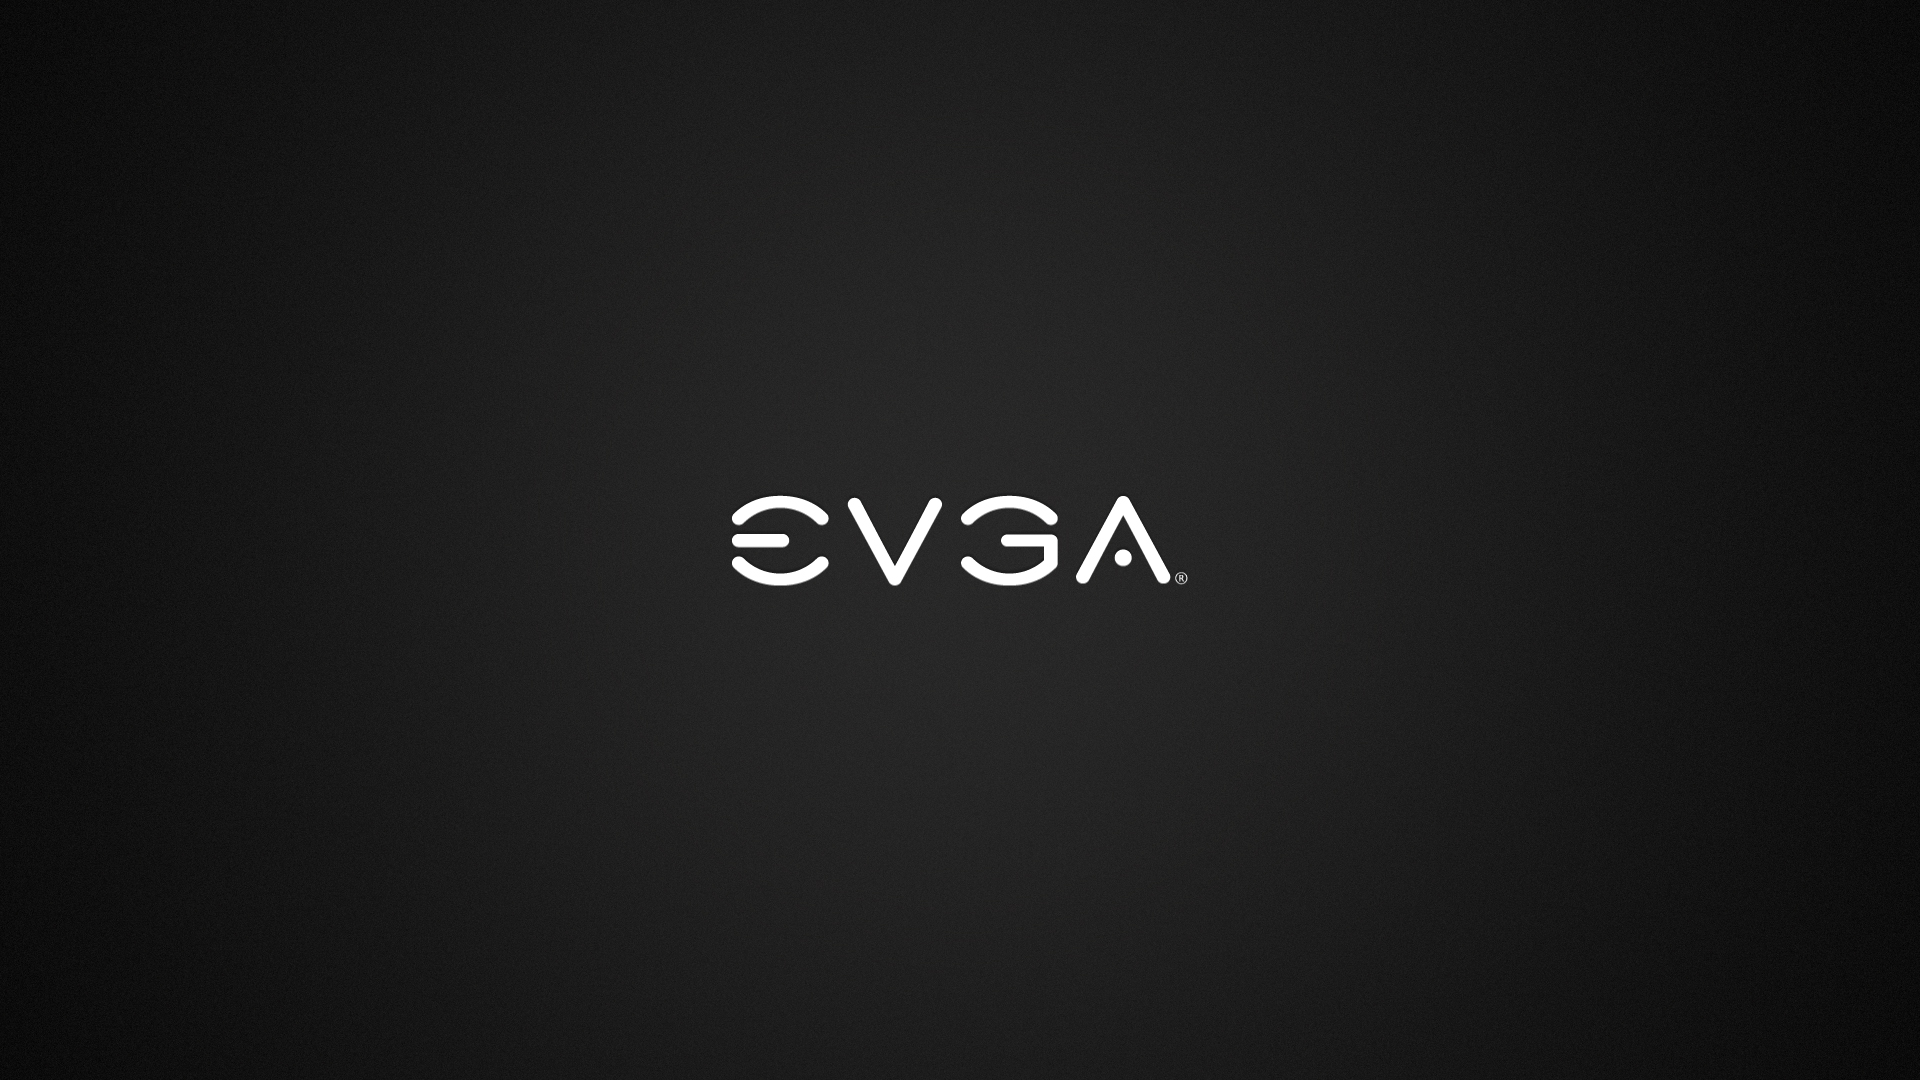 Evga Dark Wallpaper 1080p By 2ndlight